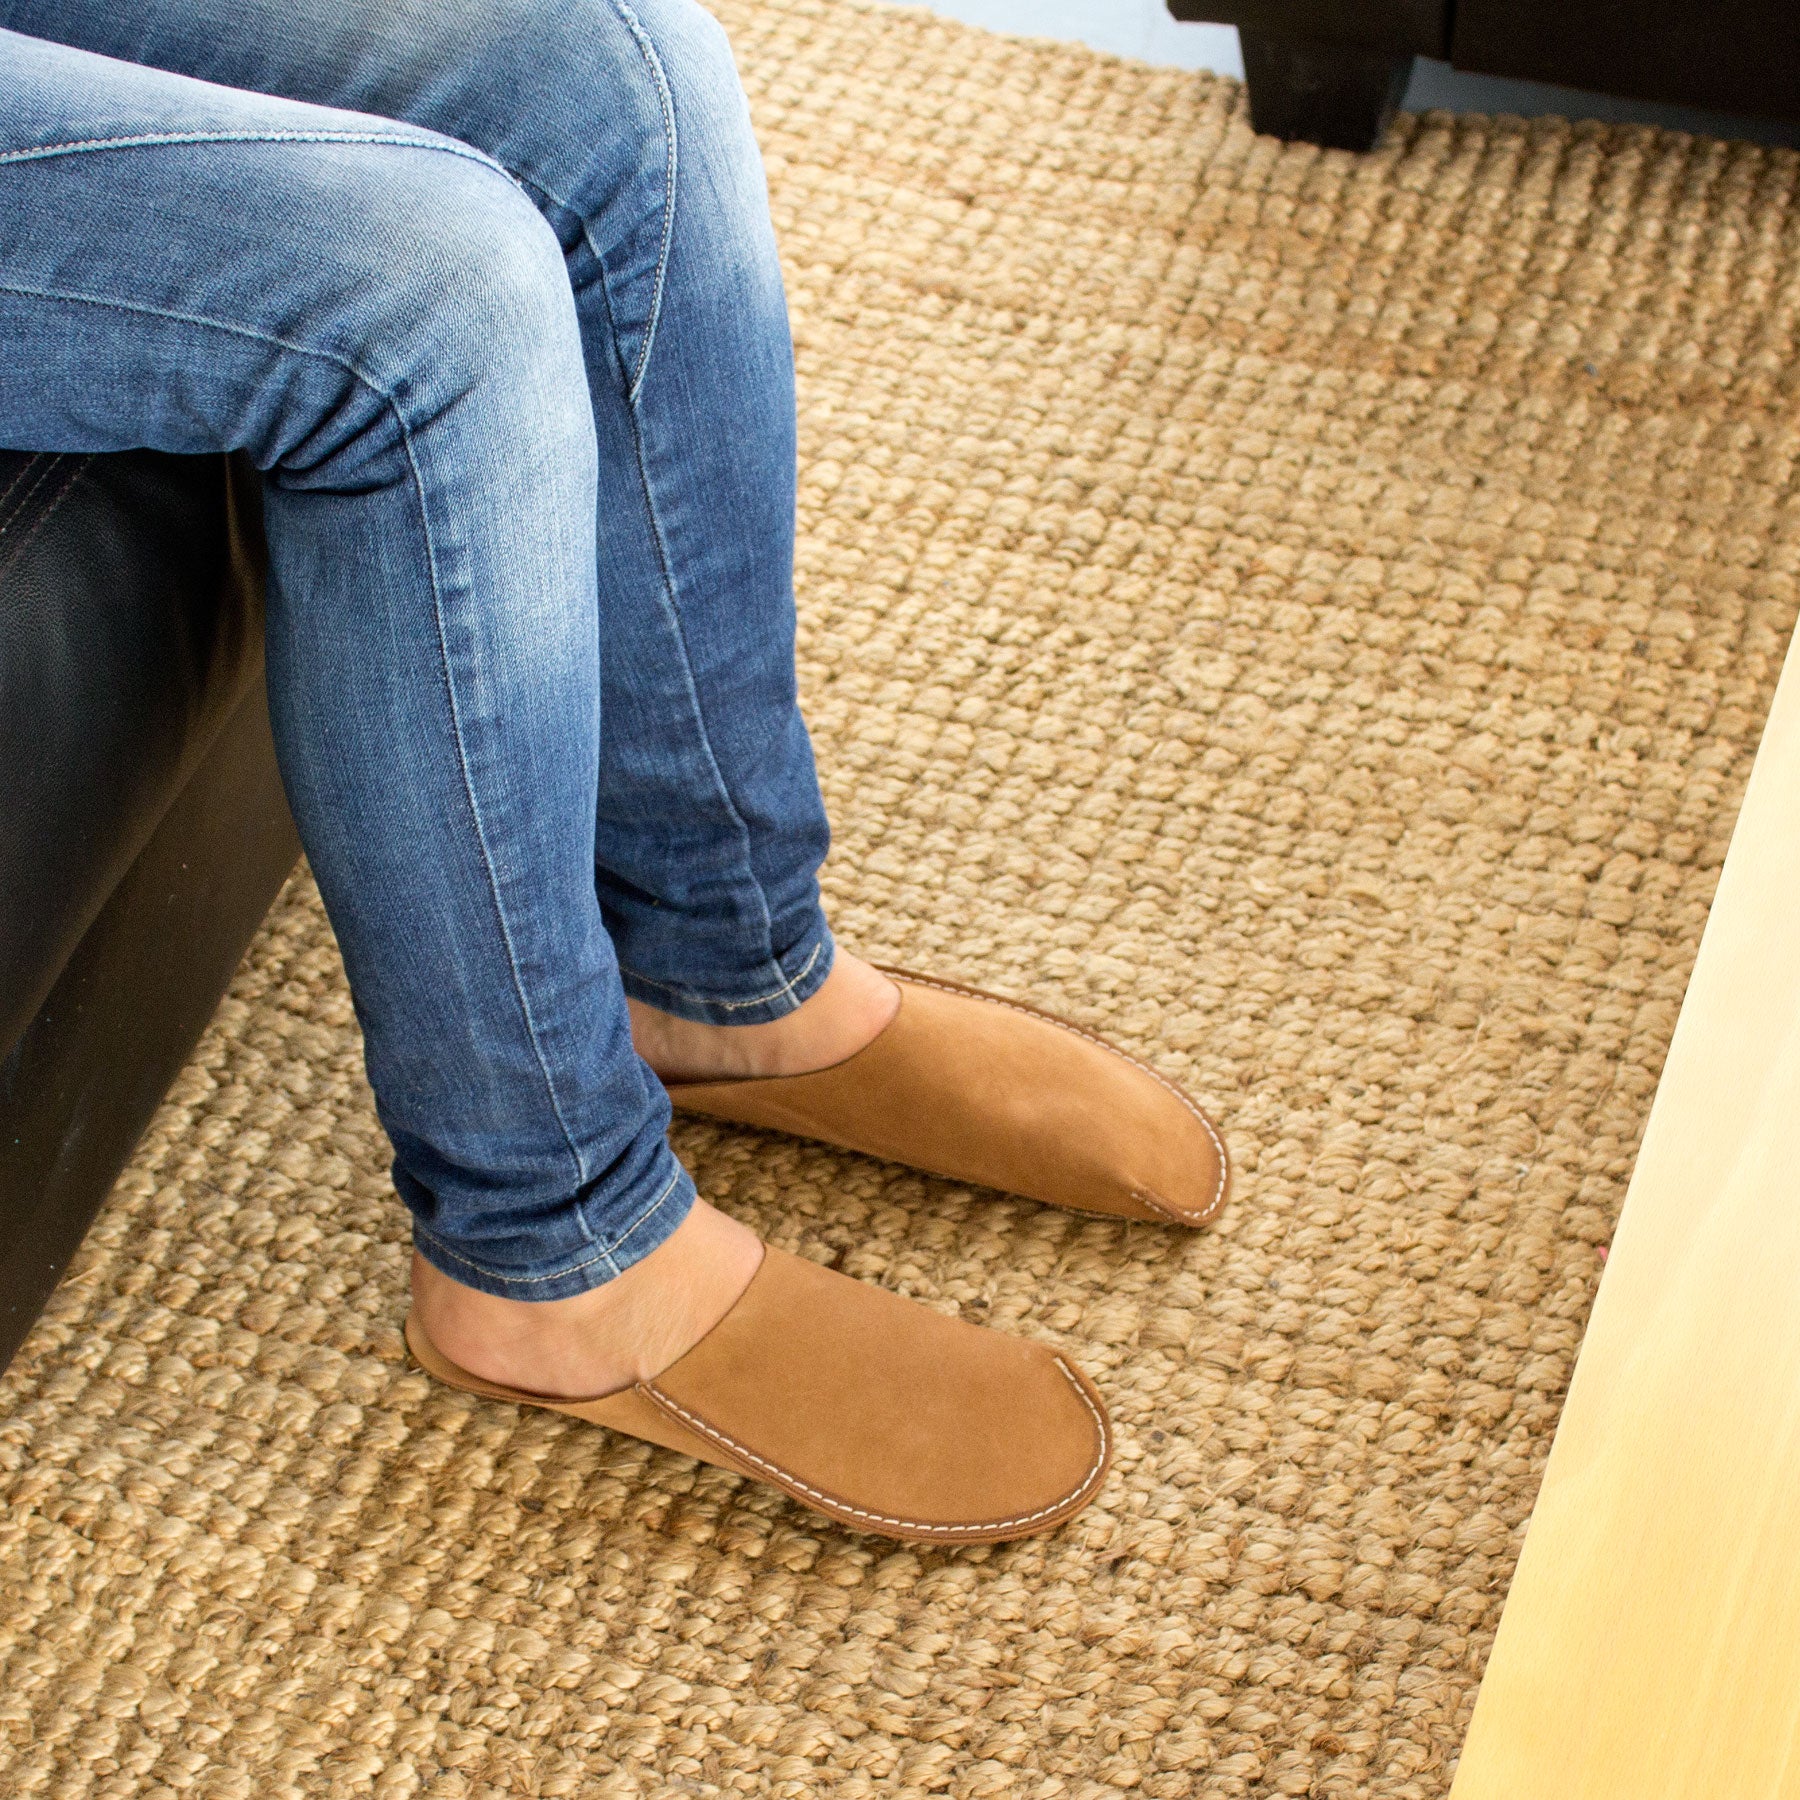 tan slippers